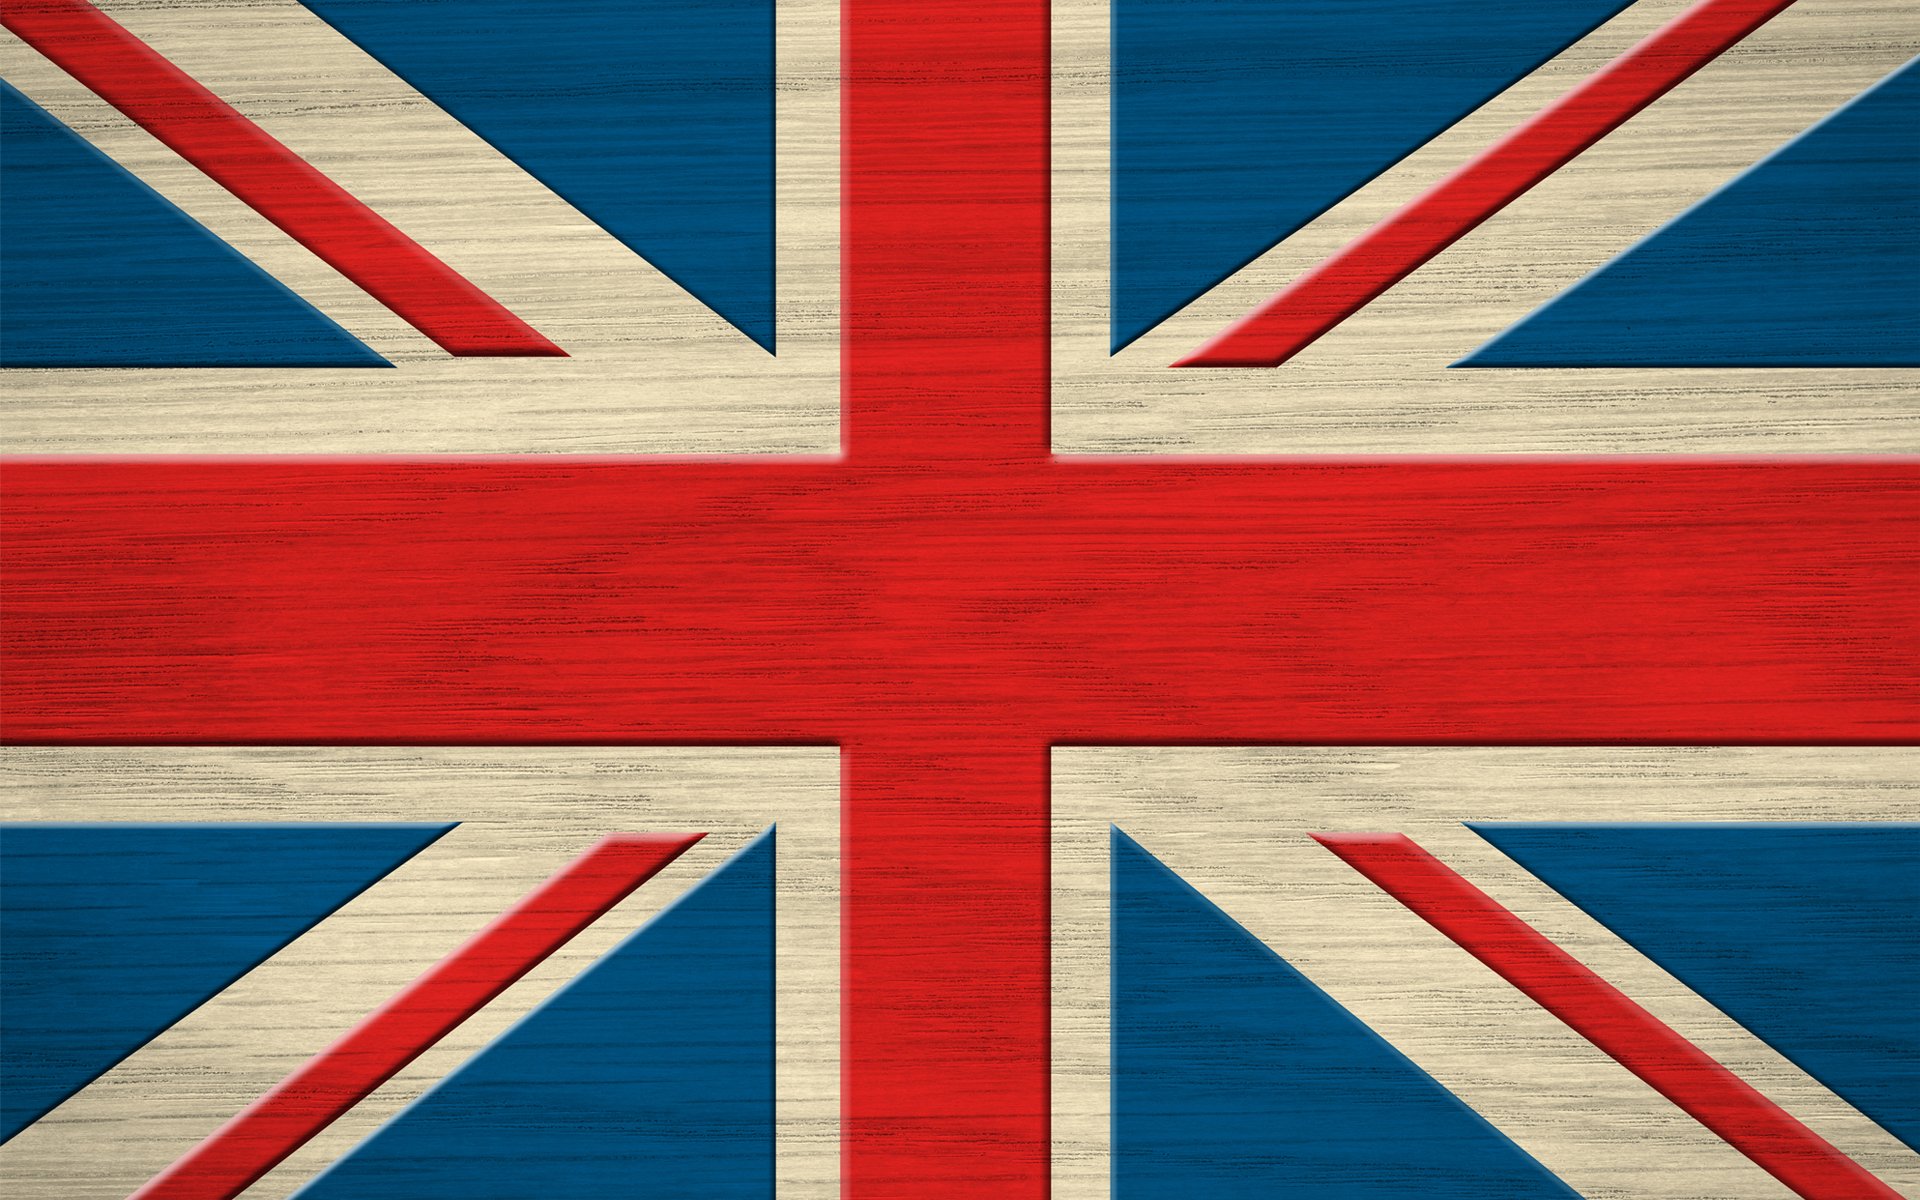 Uk 18. Флаг Англии 1606. Великобритания Юнион Джек. Юнион Джек флаг. Флаг Великобритании 1936.